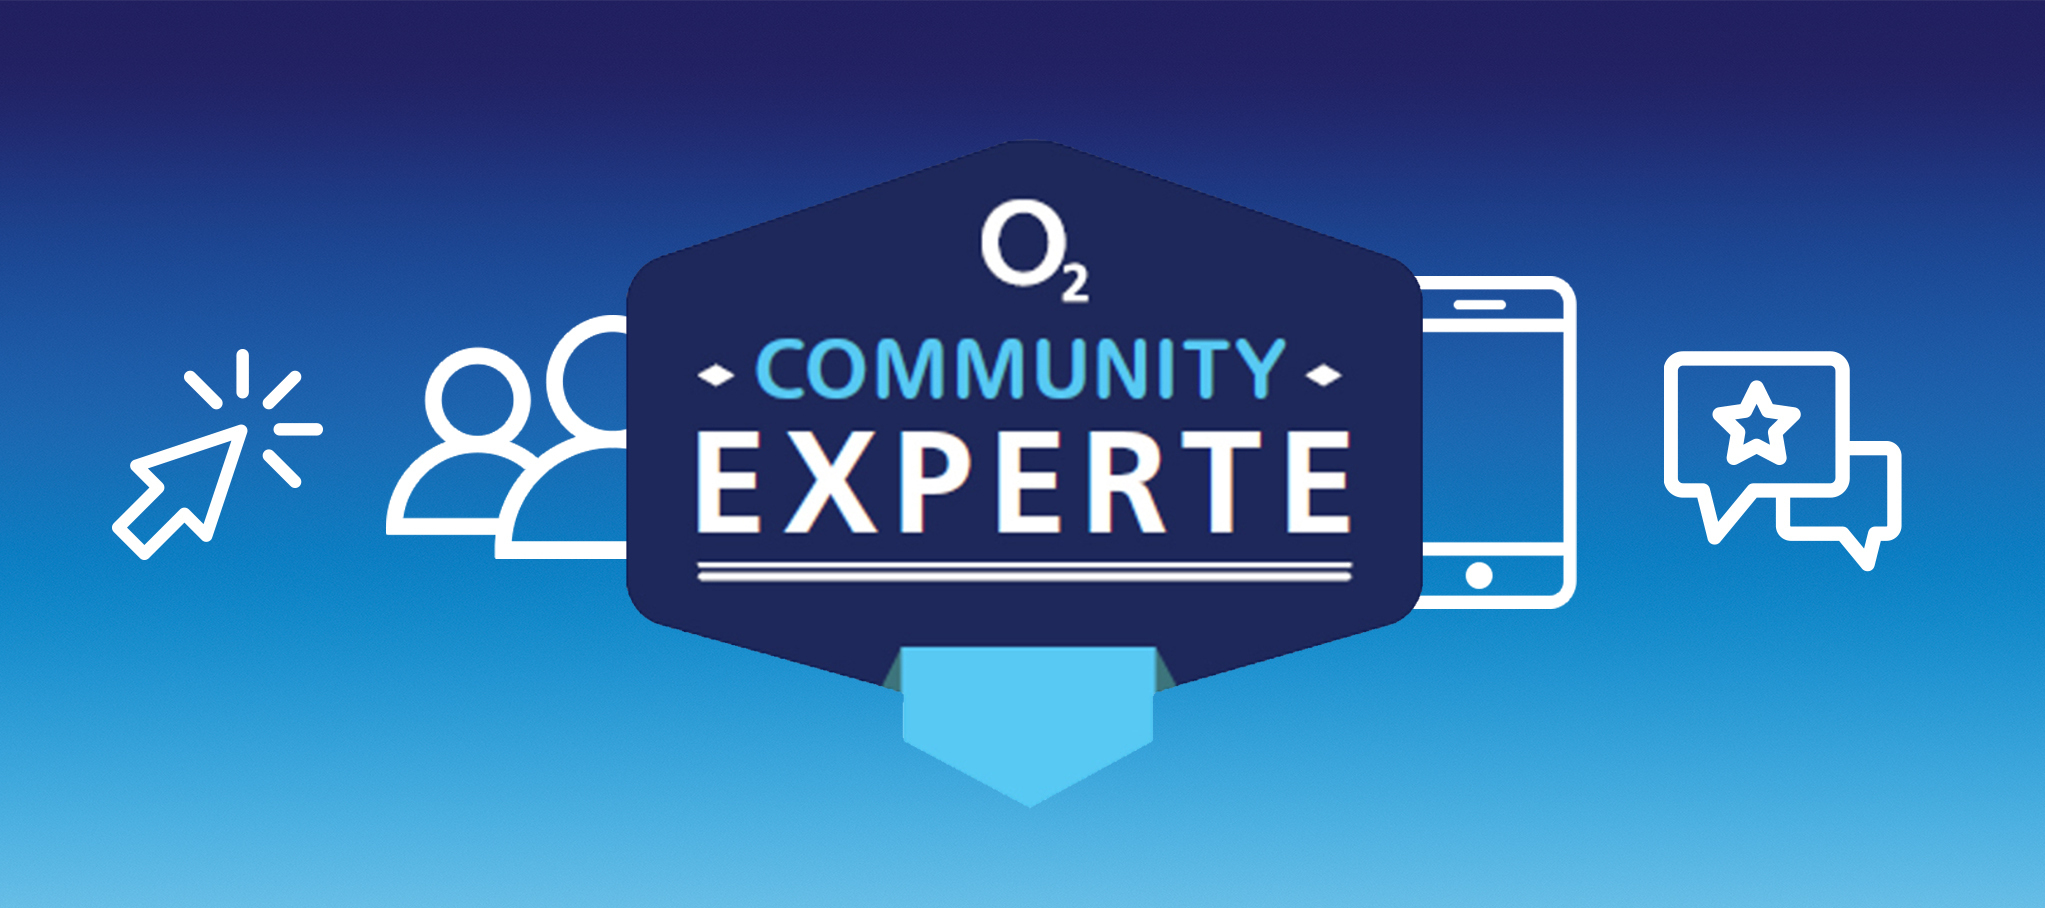 Unser neues O₂ Community Experten Programm